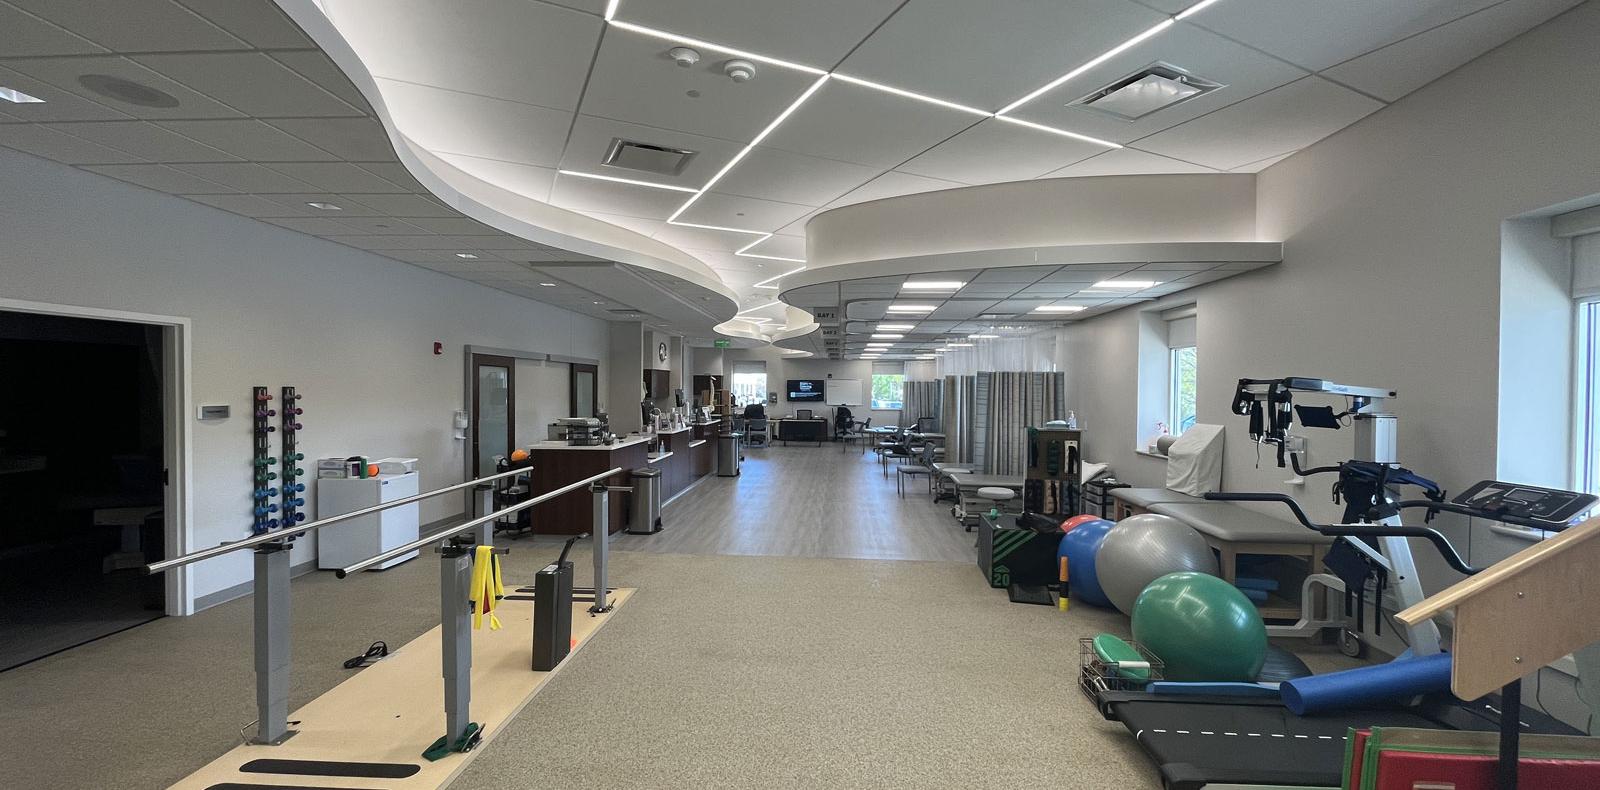 Backus Outpatient Care Center Renovation